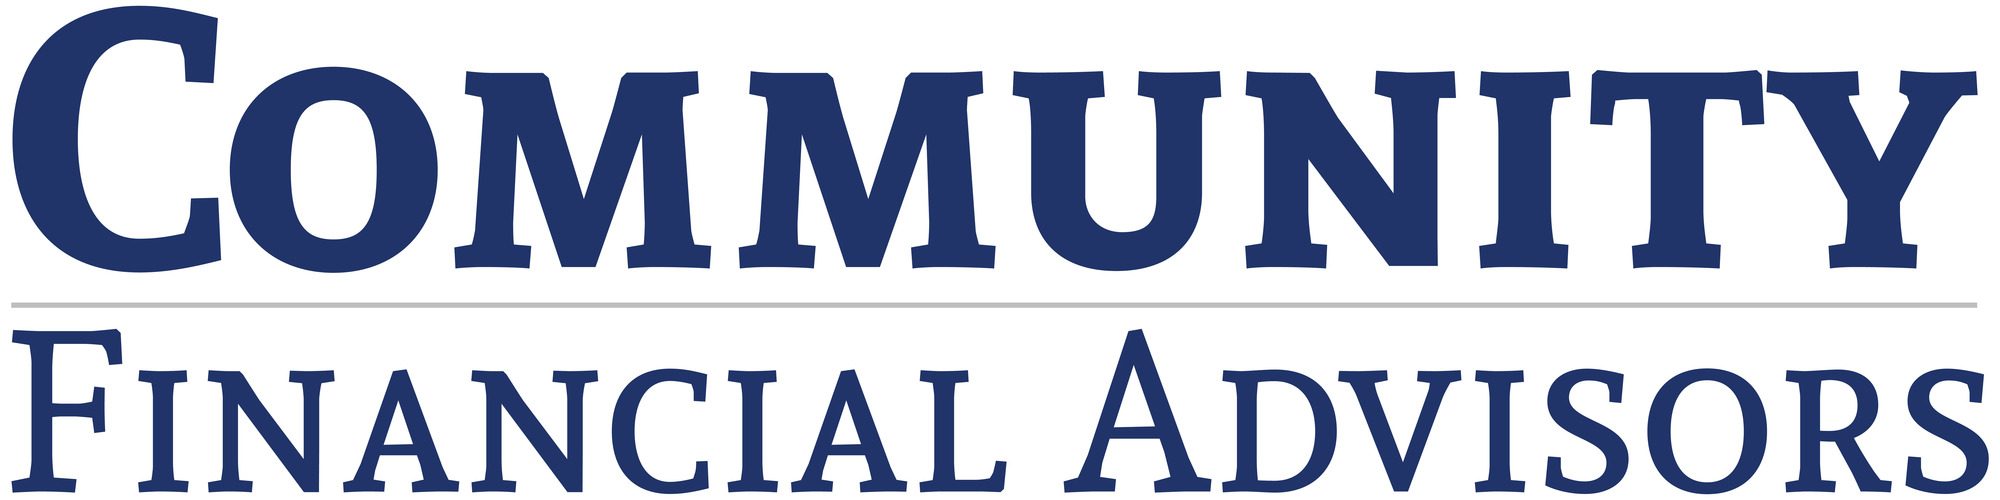 Community Financial Advisors team logo